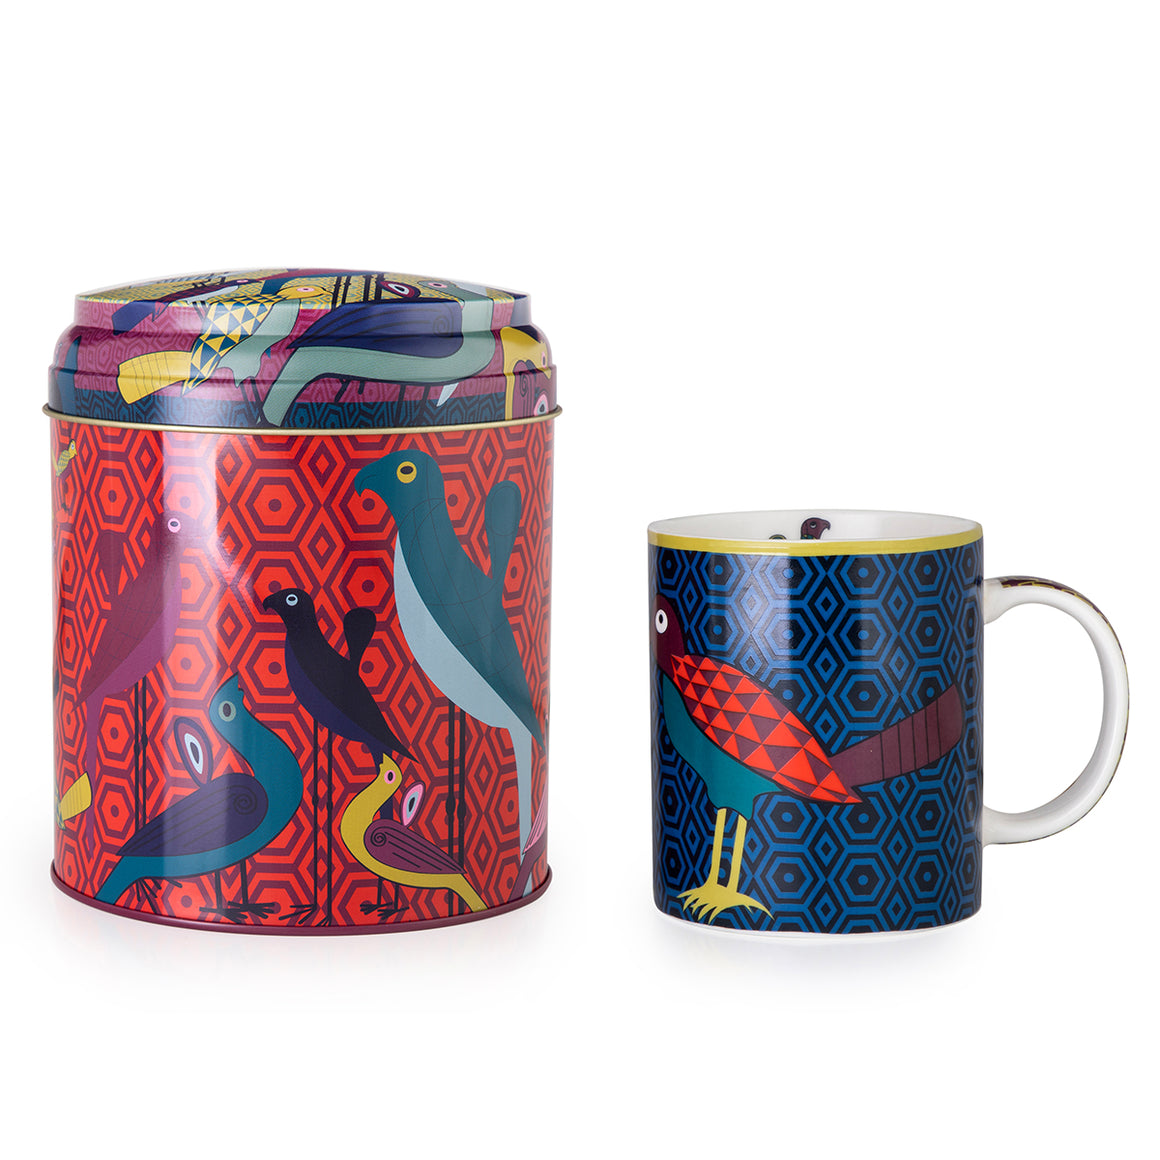 Tin Box With Mug - Birds Of Paradise